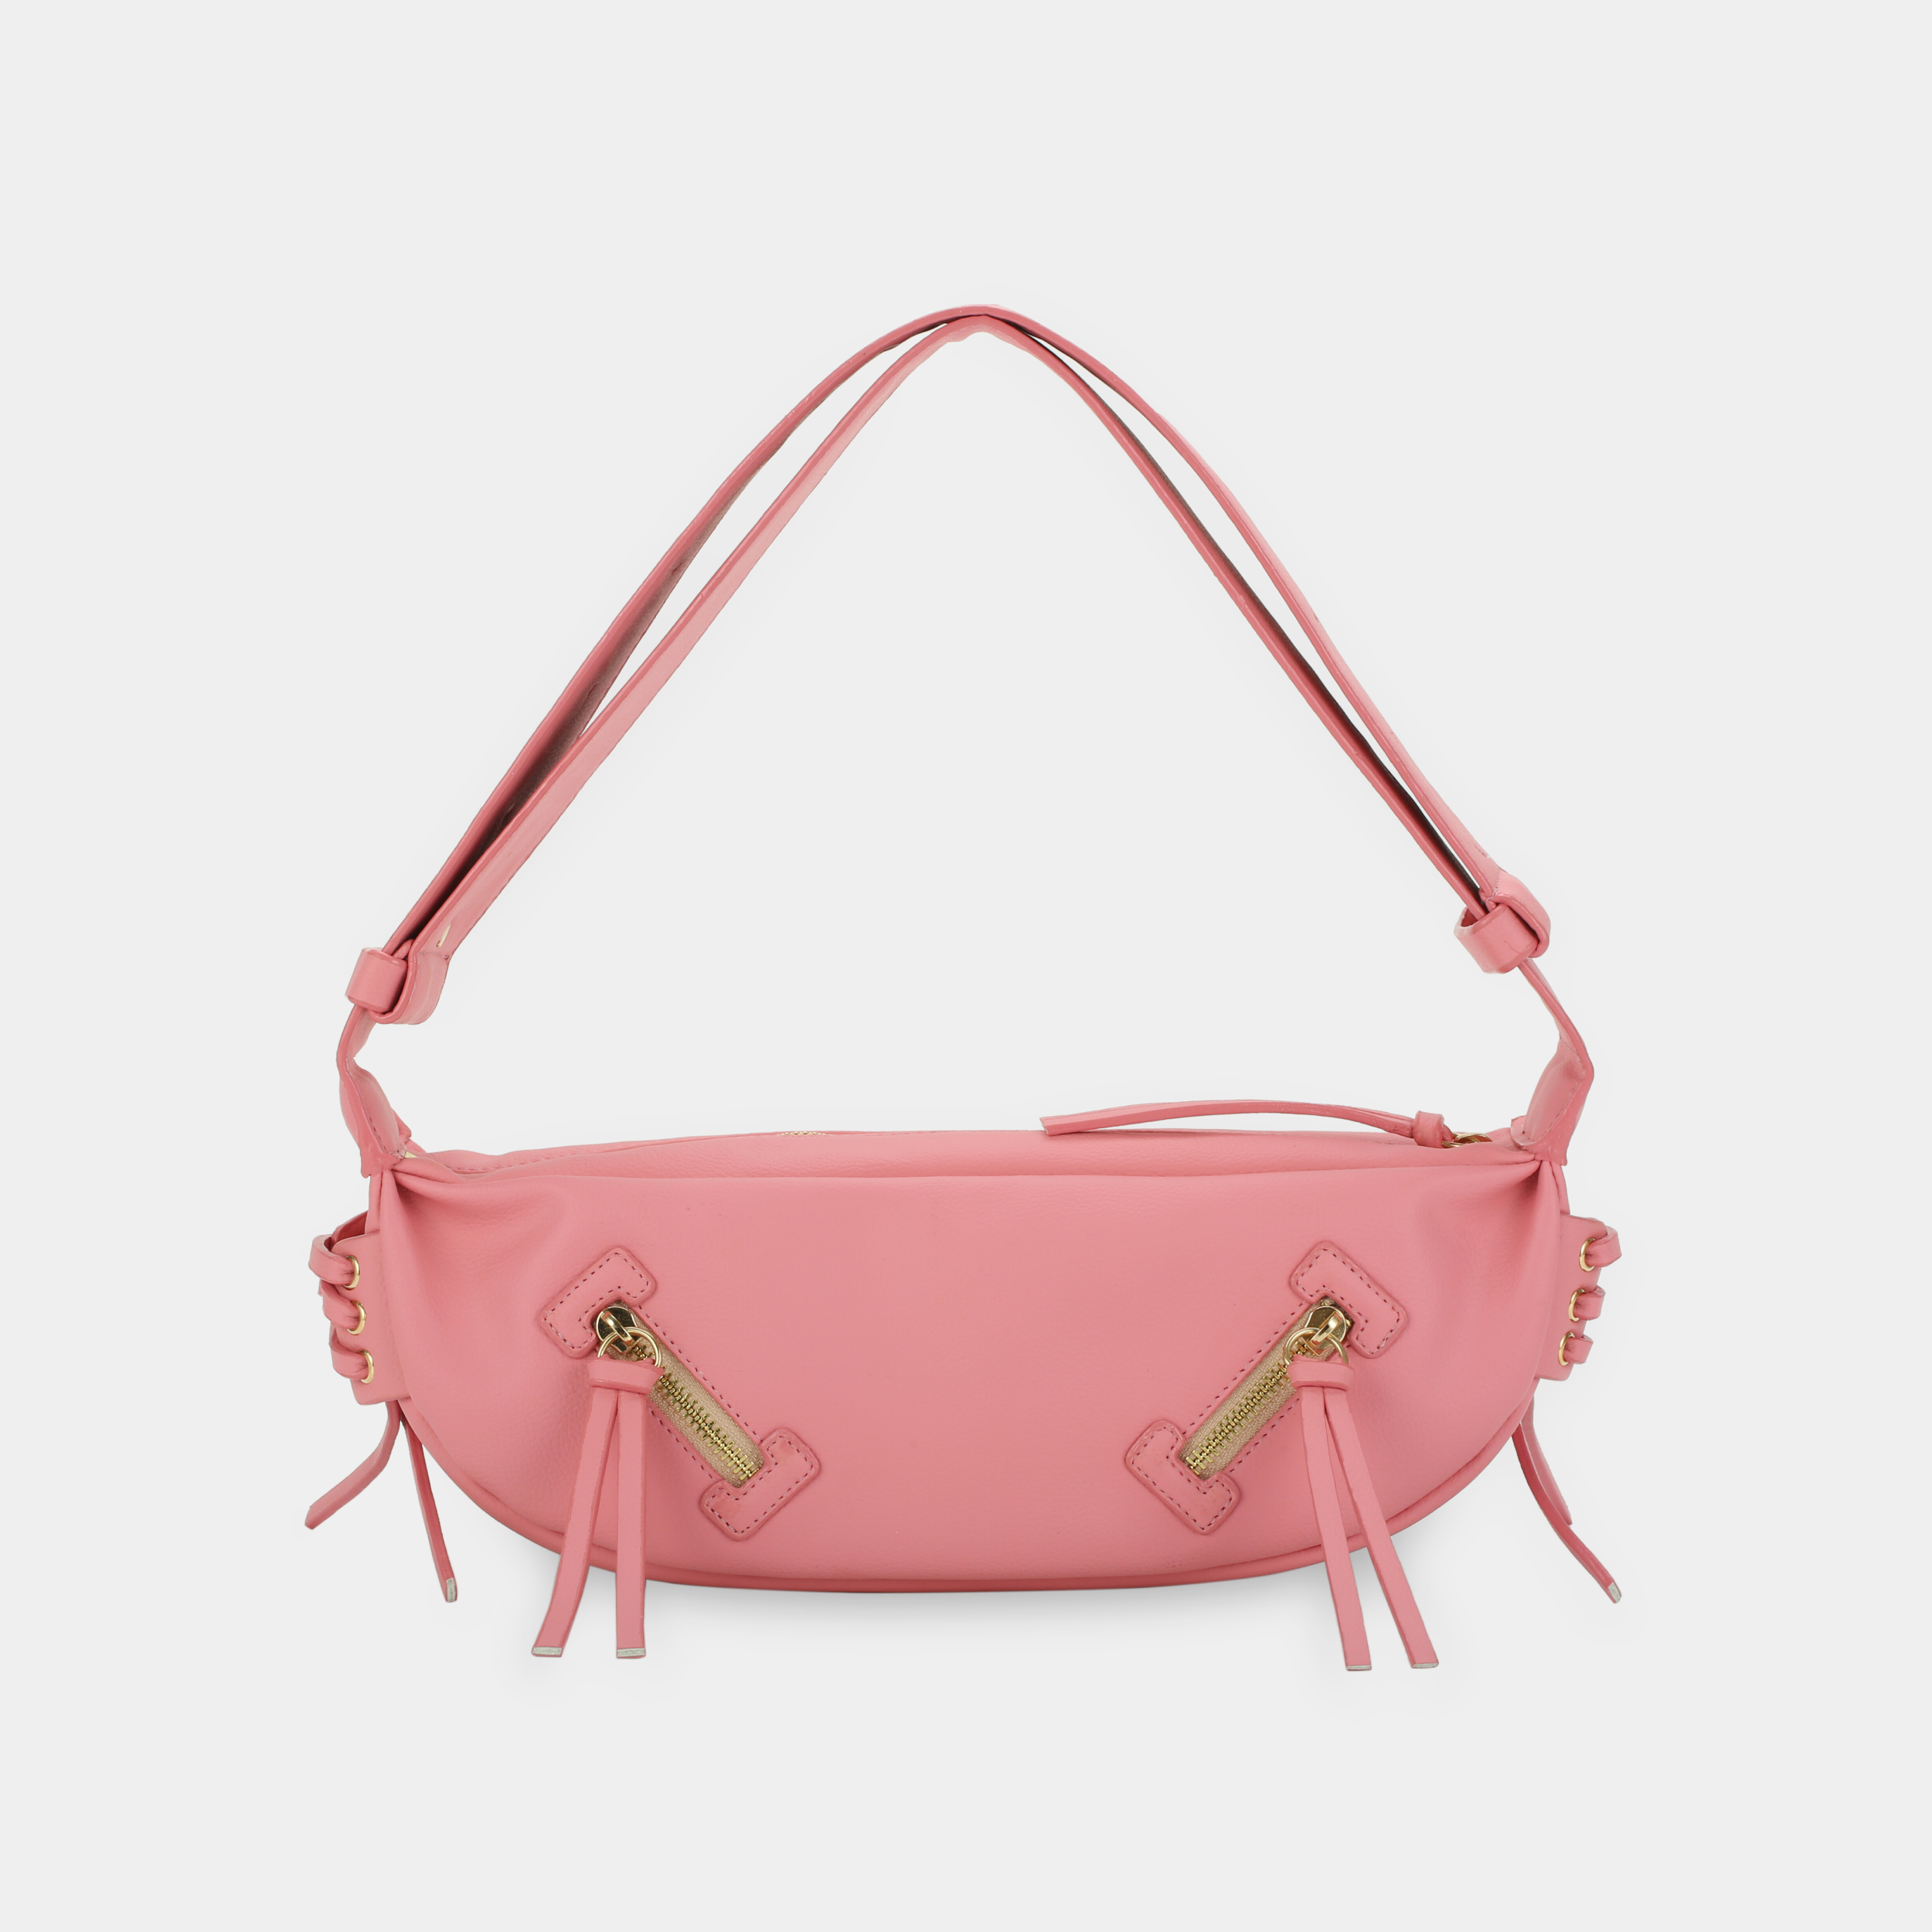 Túi xách LACE size lớn (M) màu hồng pastel